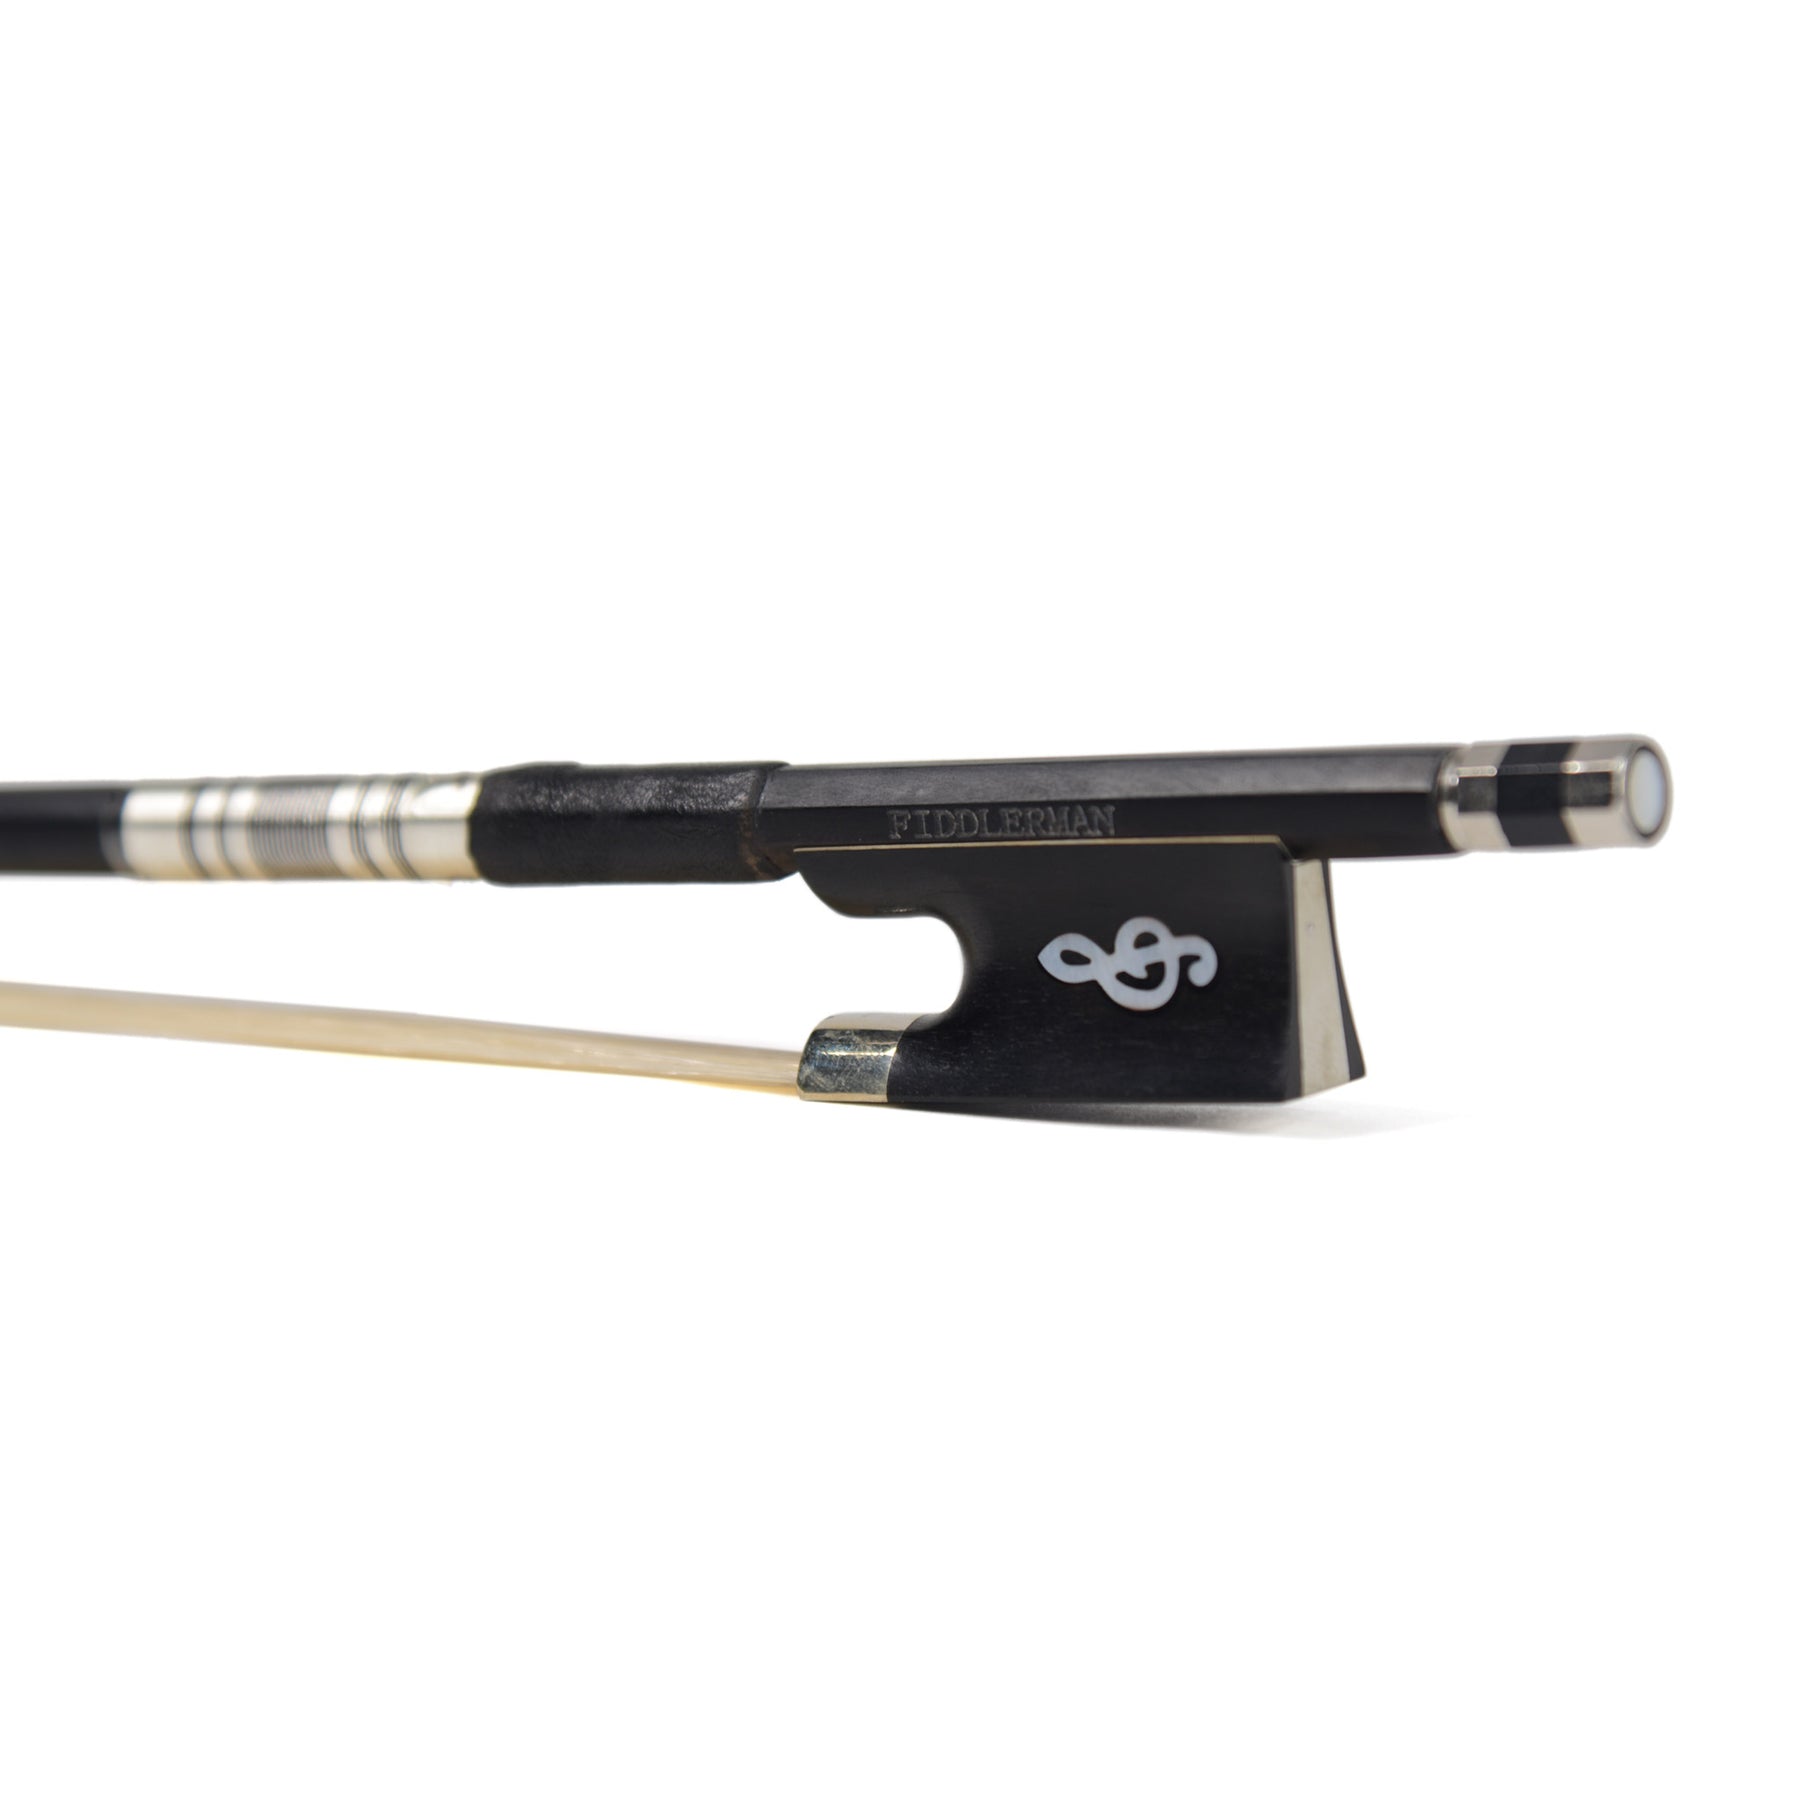 B-Stock Fiddlerman Carbon Fiber Violin Bow (Previous Model)